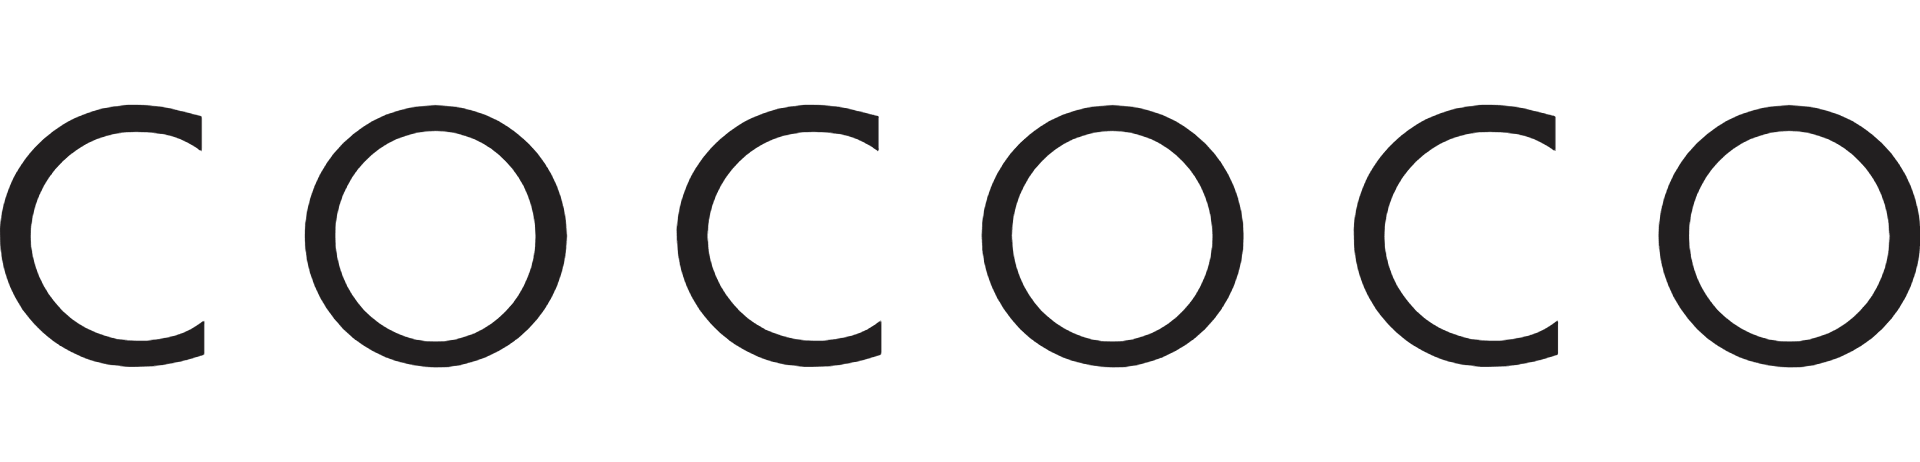 cococo-logo